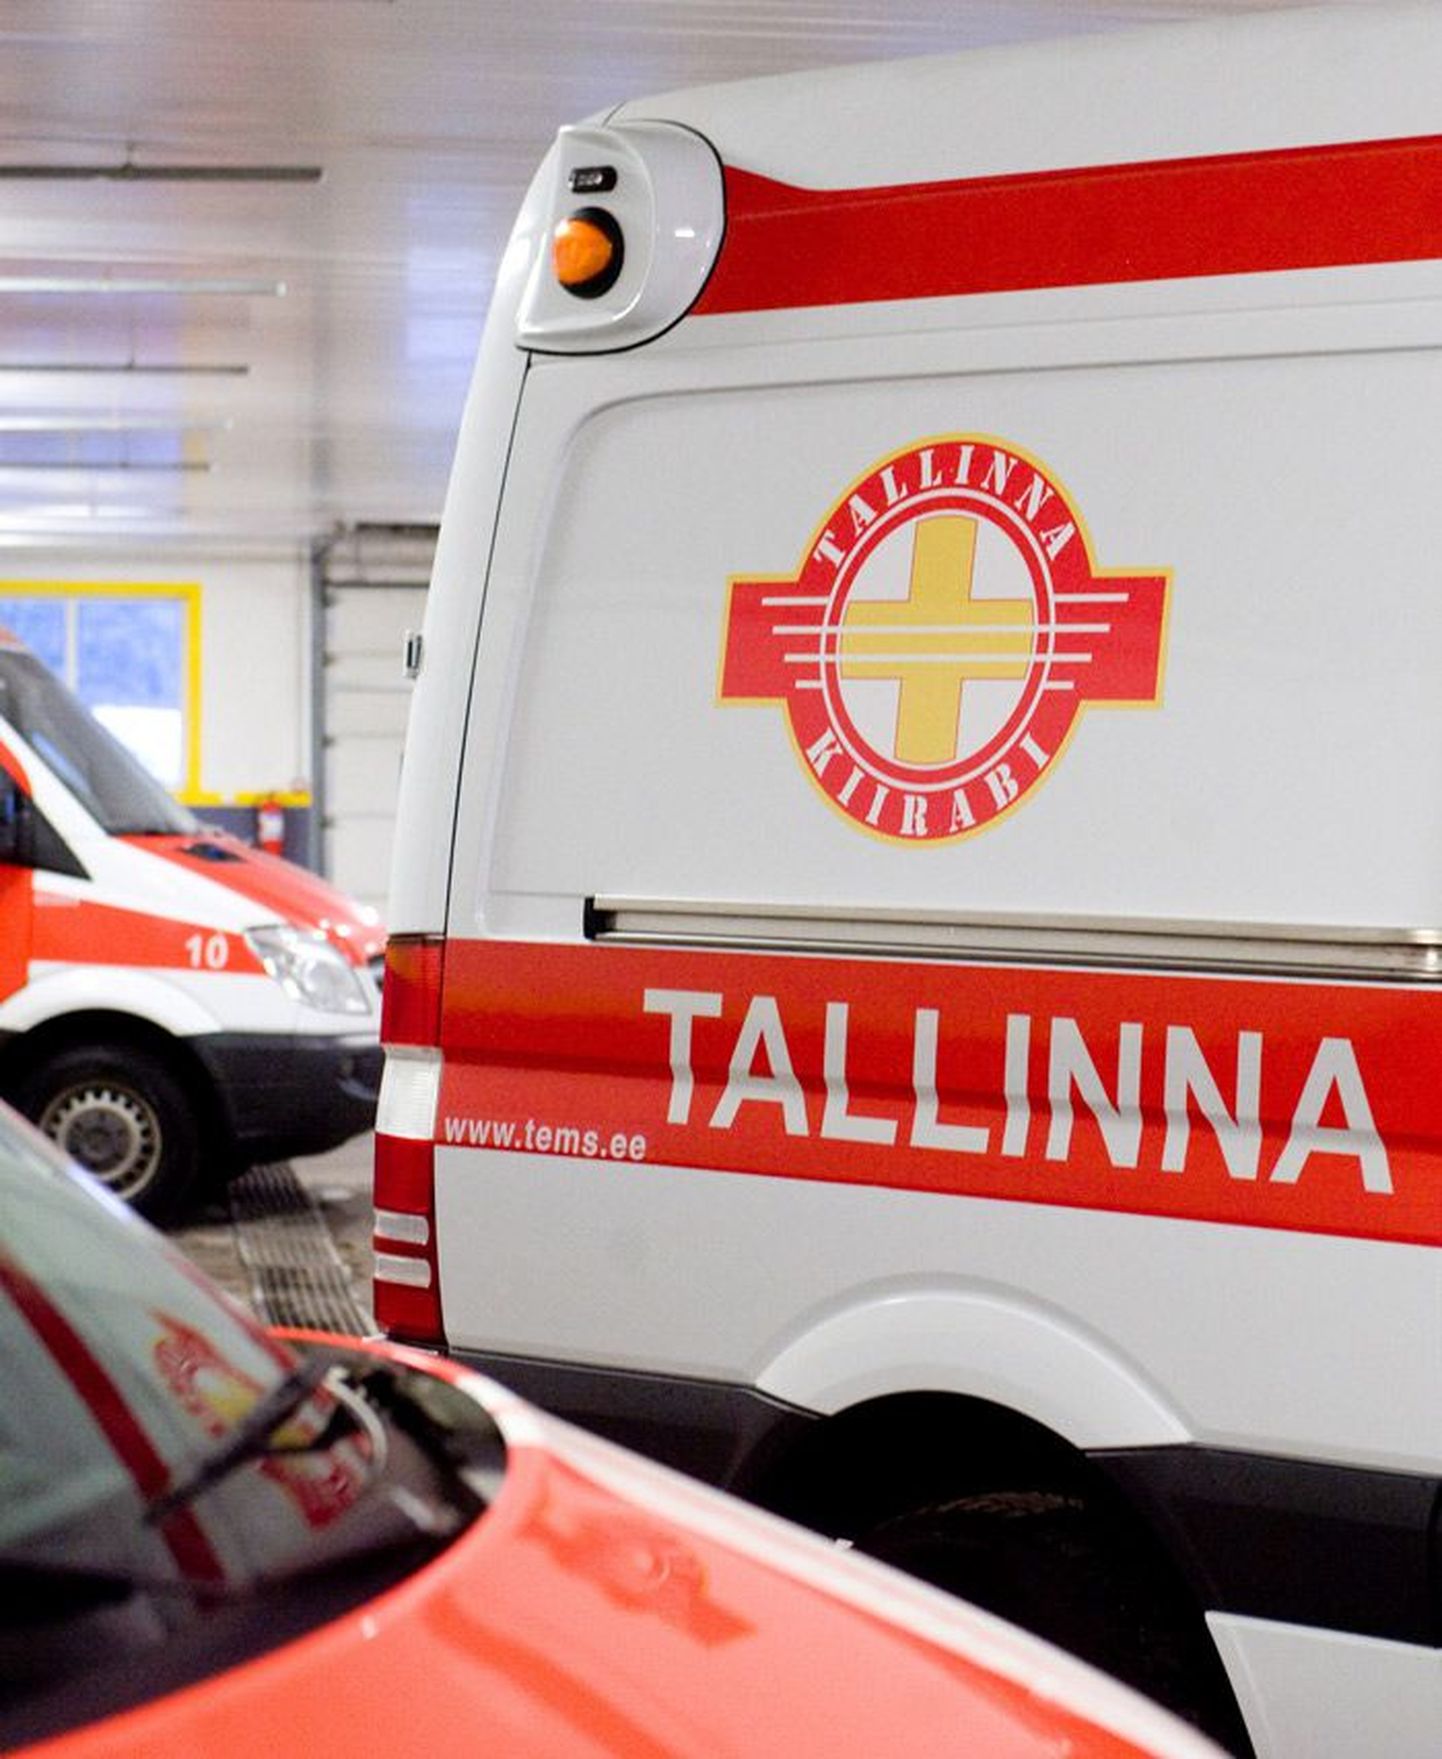 Tallinna kiirabiauto garaažis väljakutset ootamas.